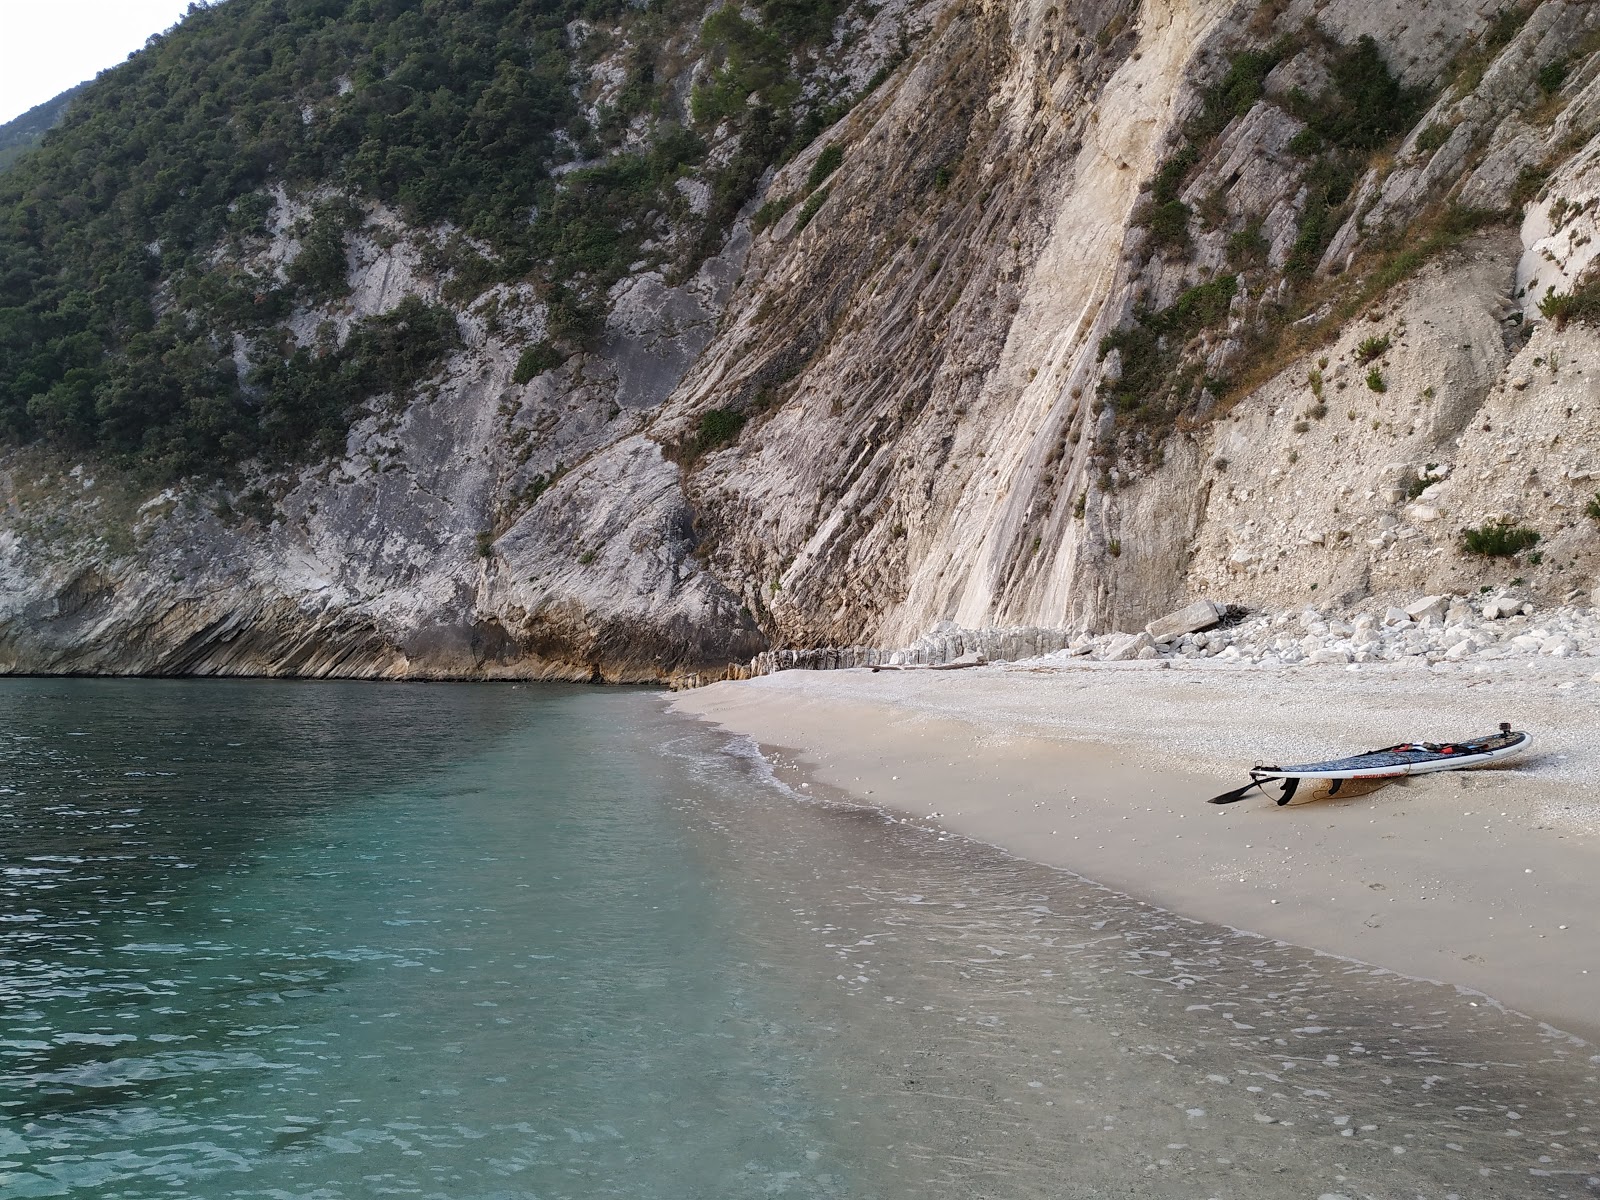 Photo of Spiaggia Sassi Bianchi and its beautiful scenery